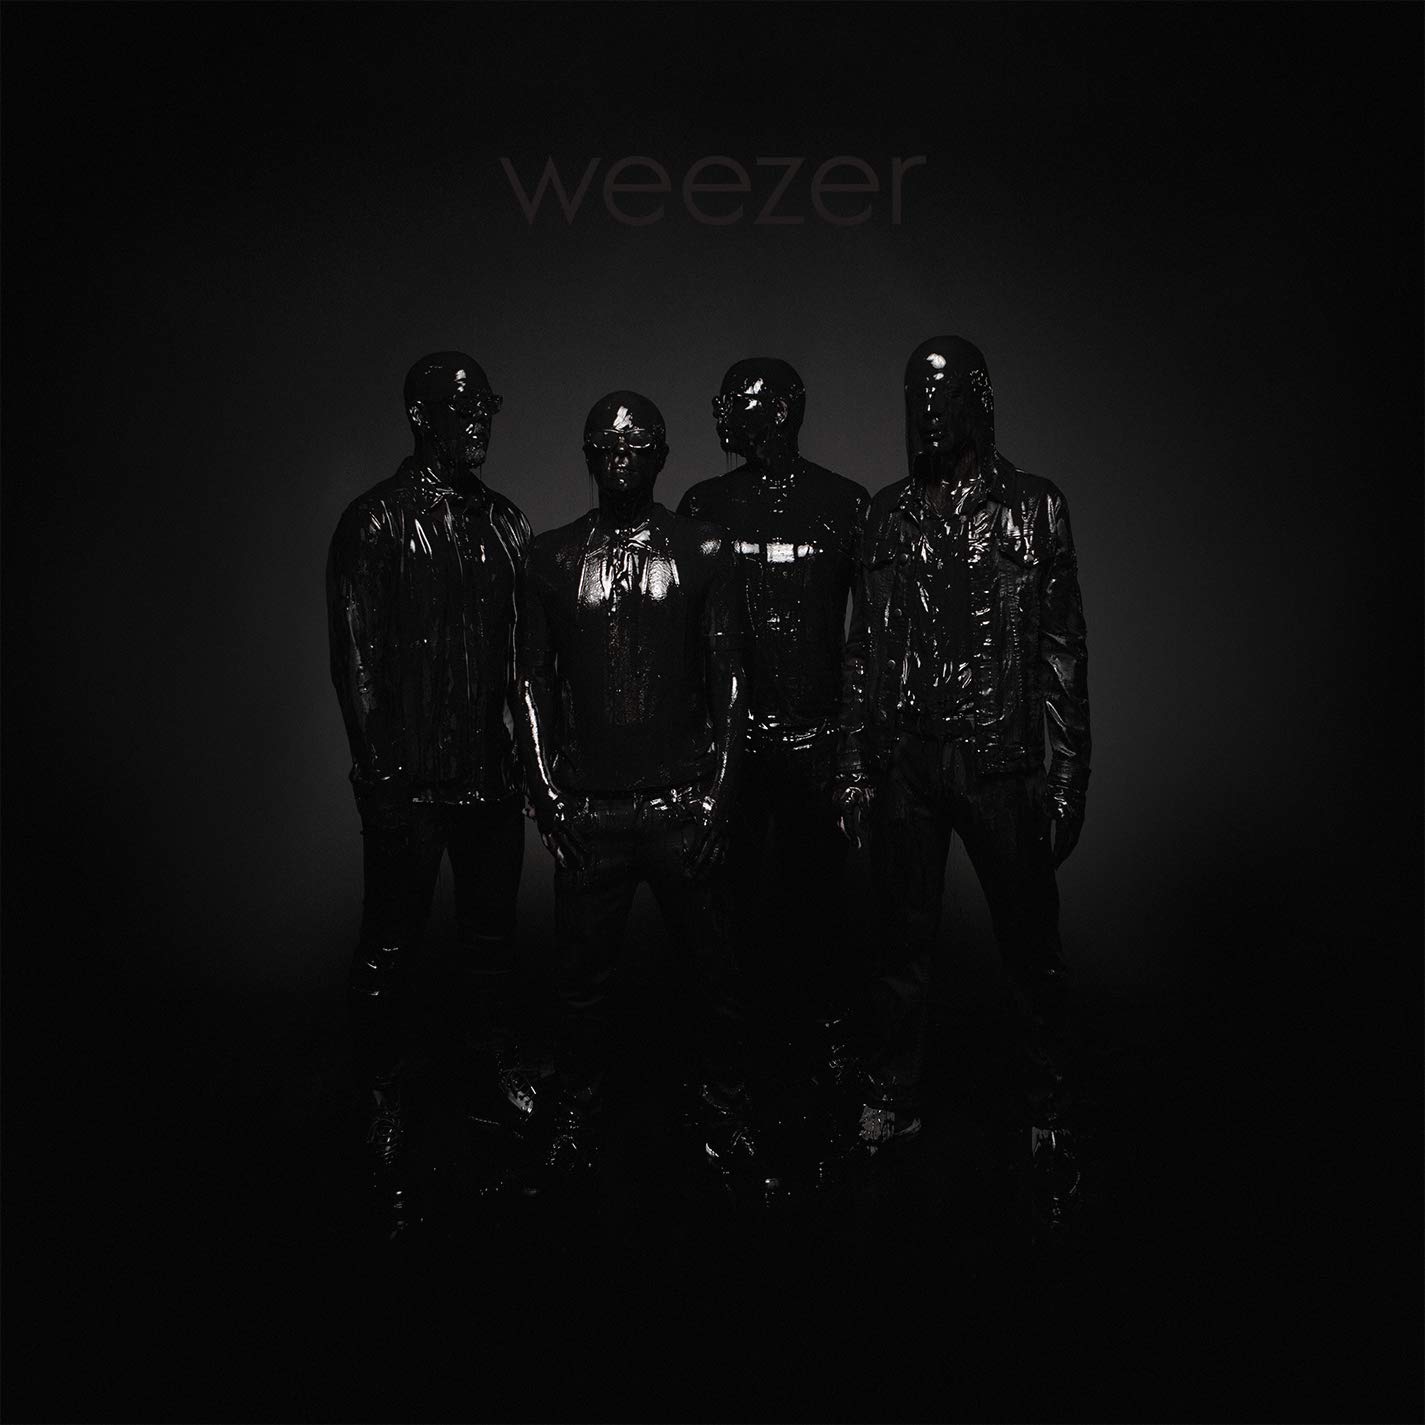 Weezer-Weezer (The Black Album)-CD-FLAC-2019-FAiNT